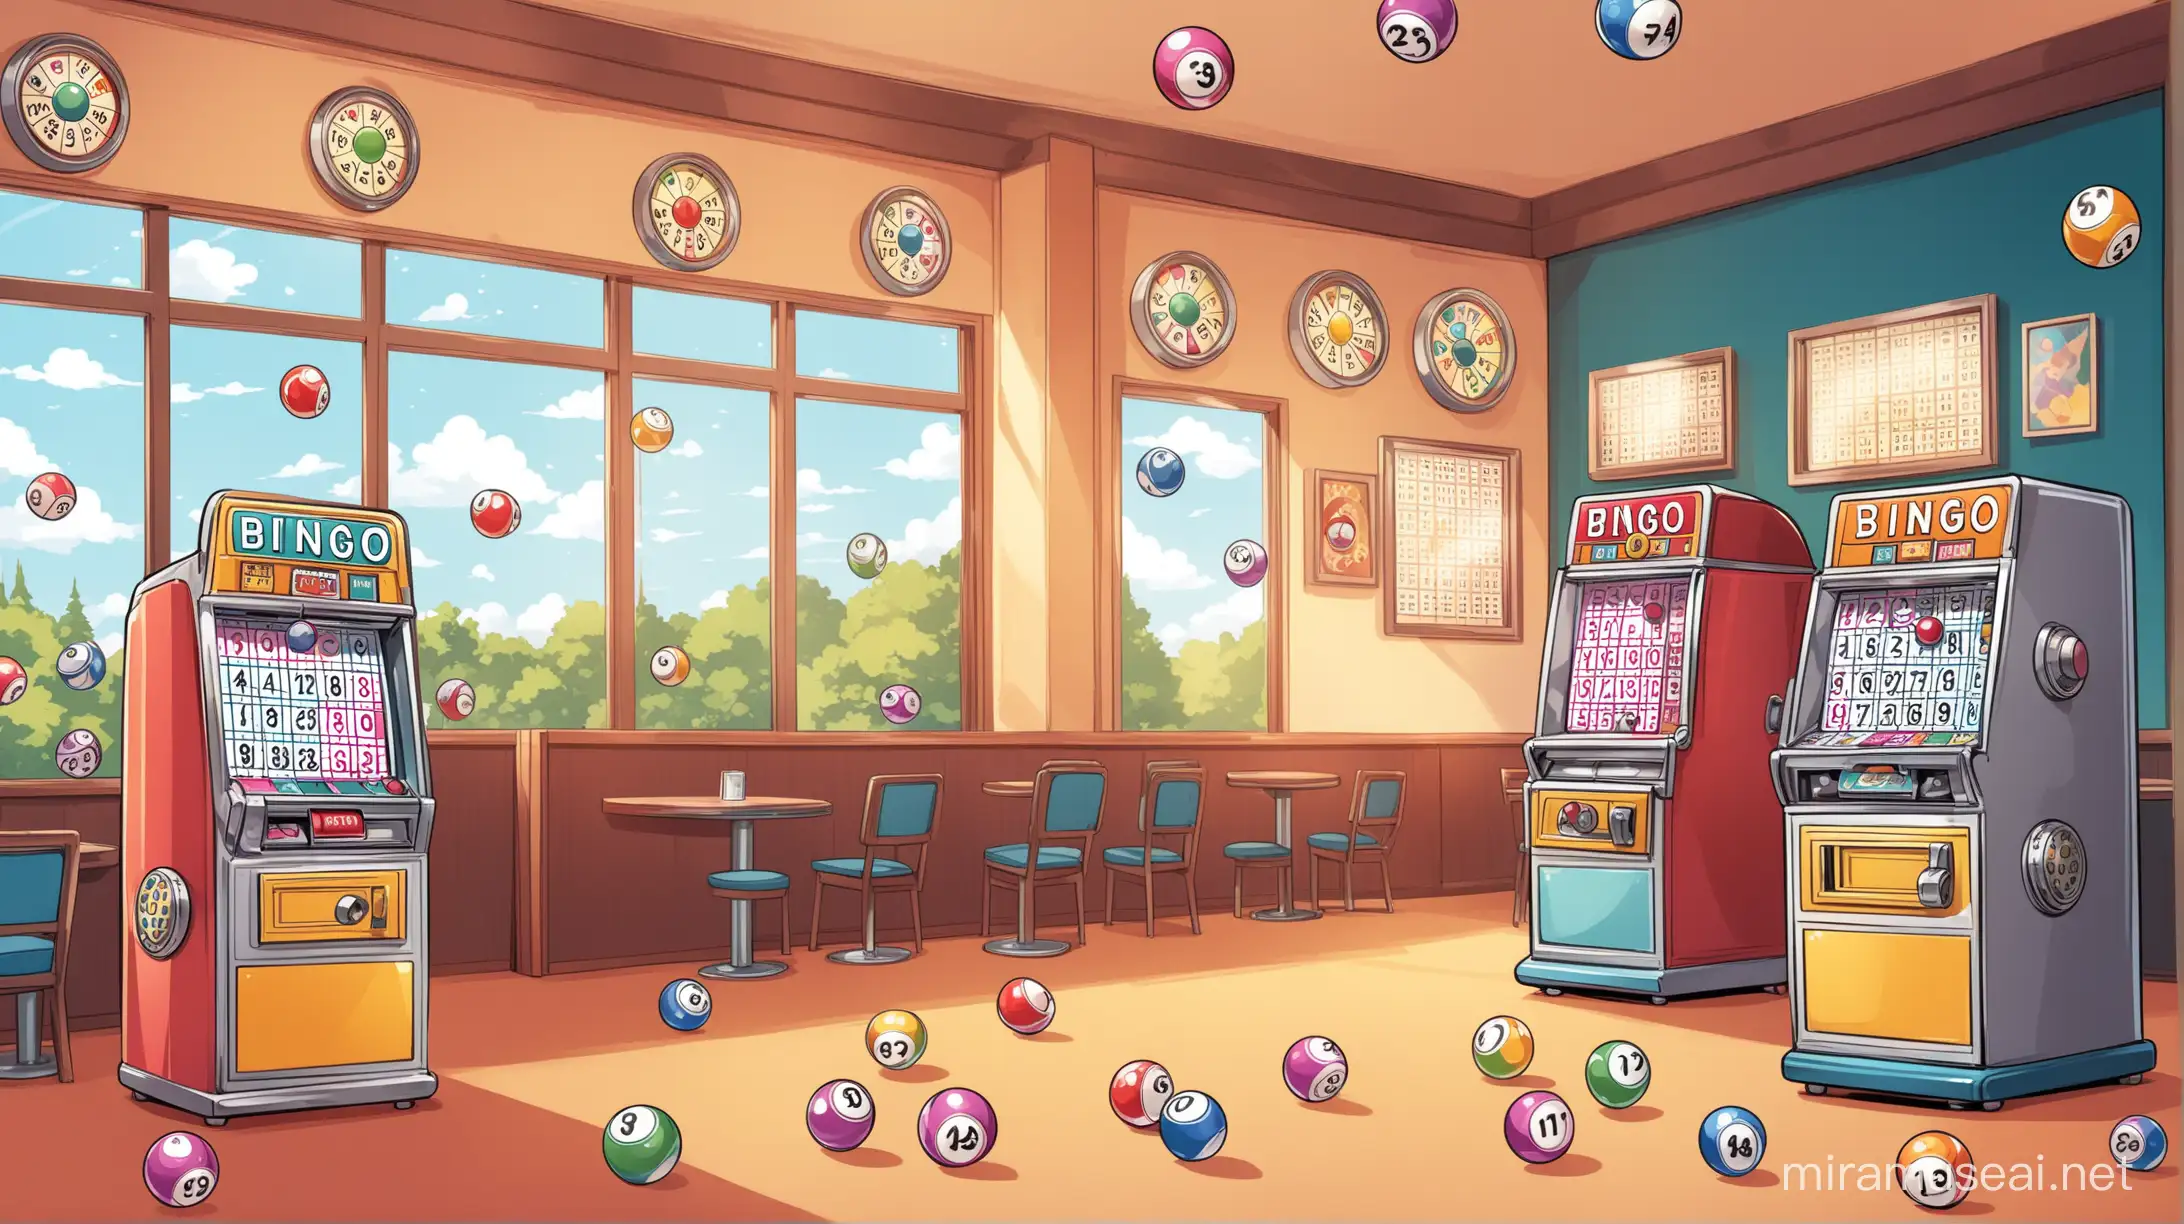 Minimalist Bingo Ball Flight with Machine and Cartoon Room Accessories